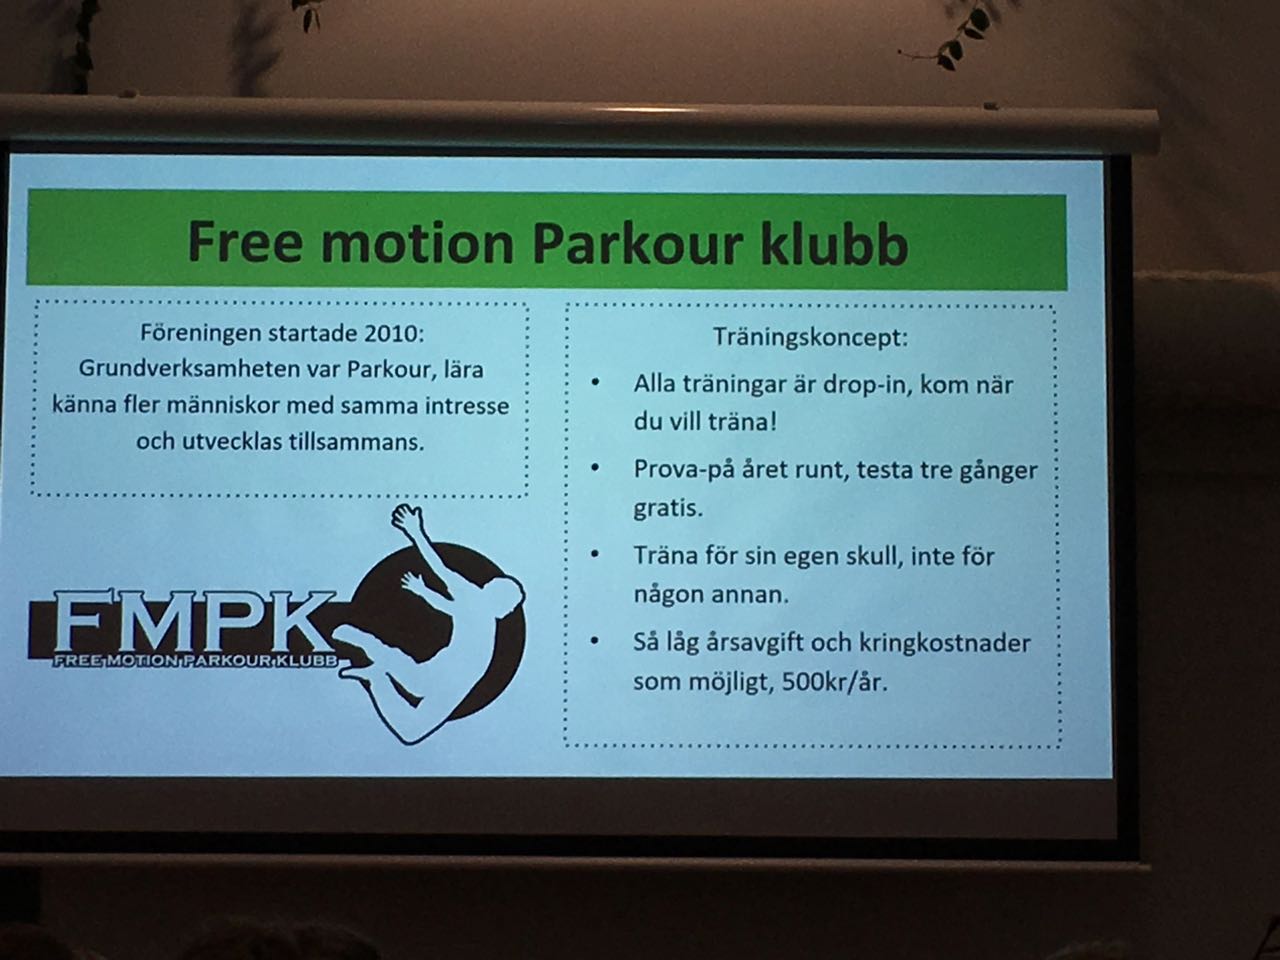 Free motion parkour klubb motionsidrott